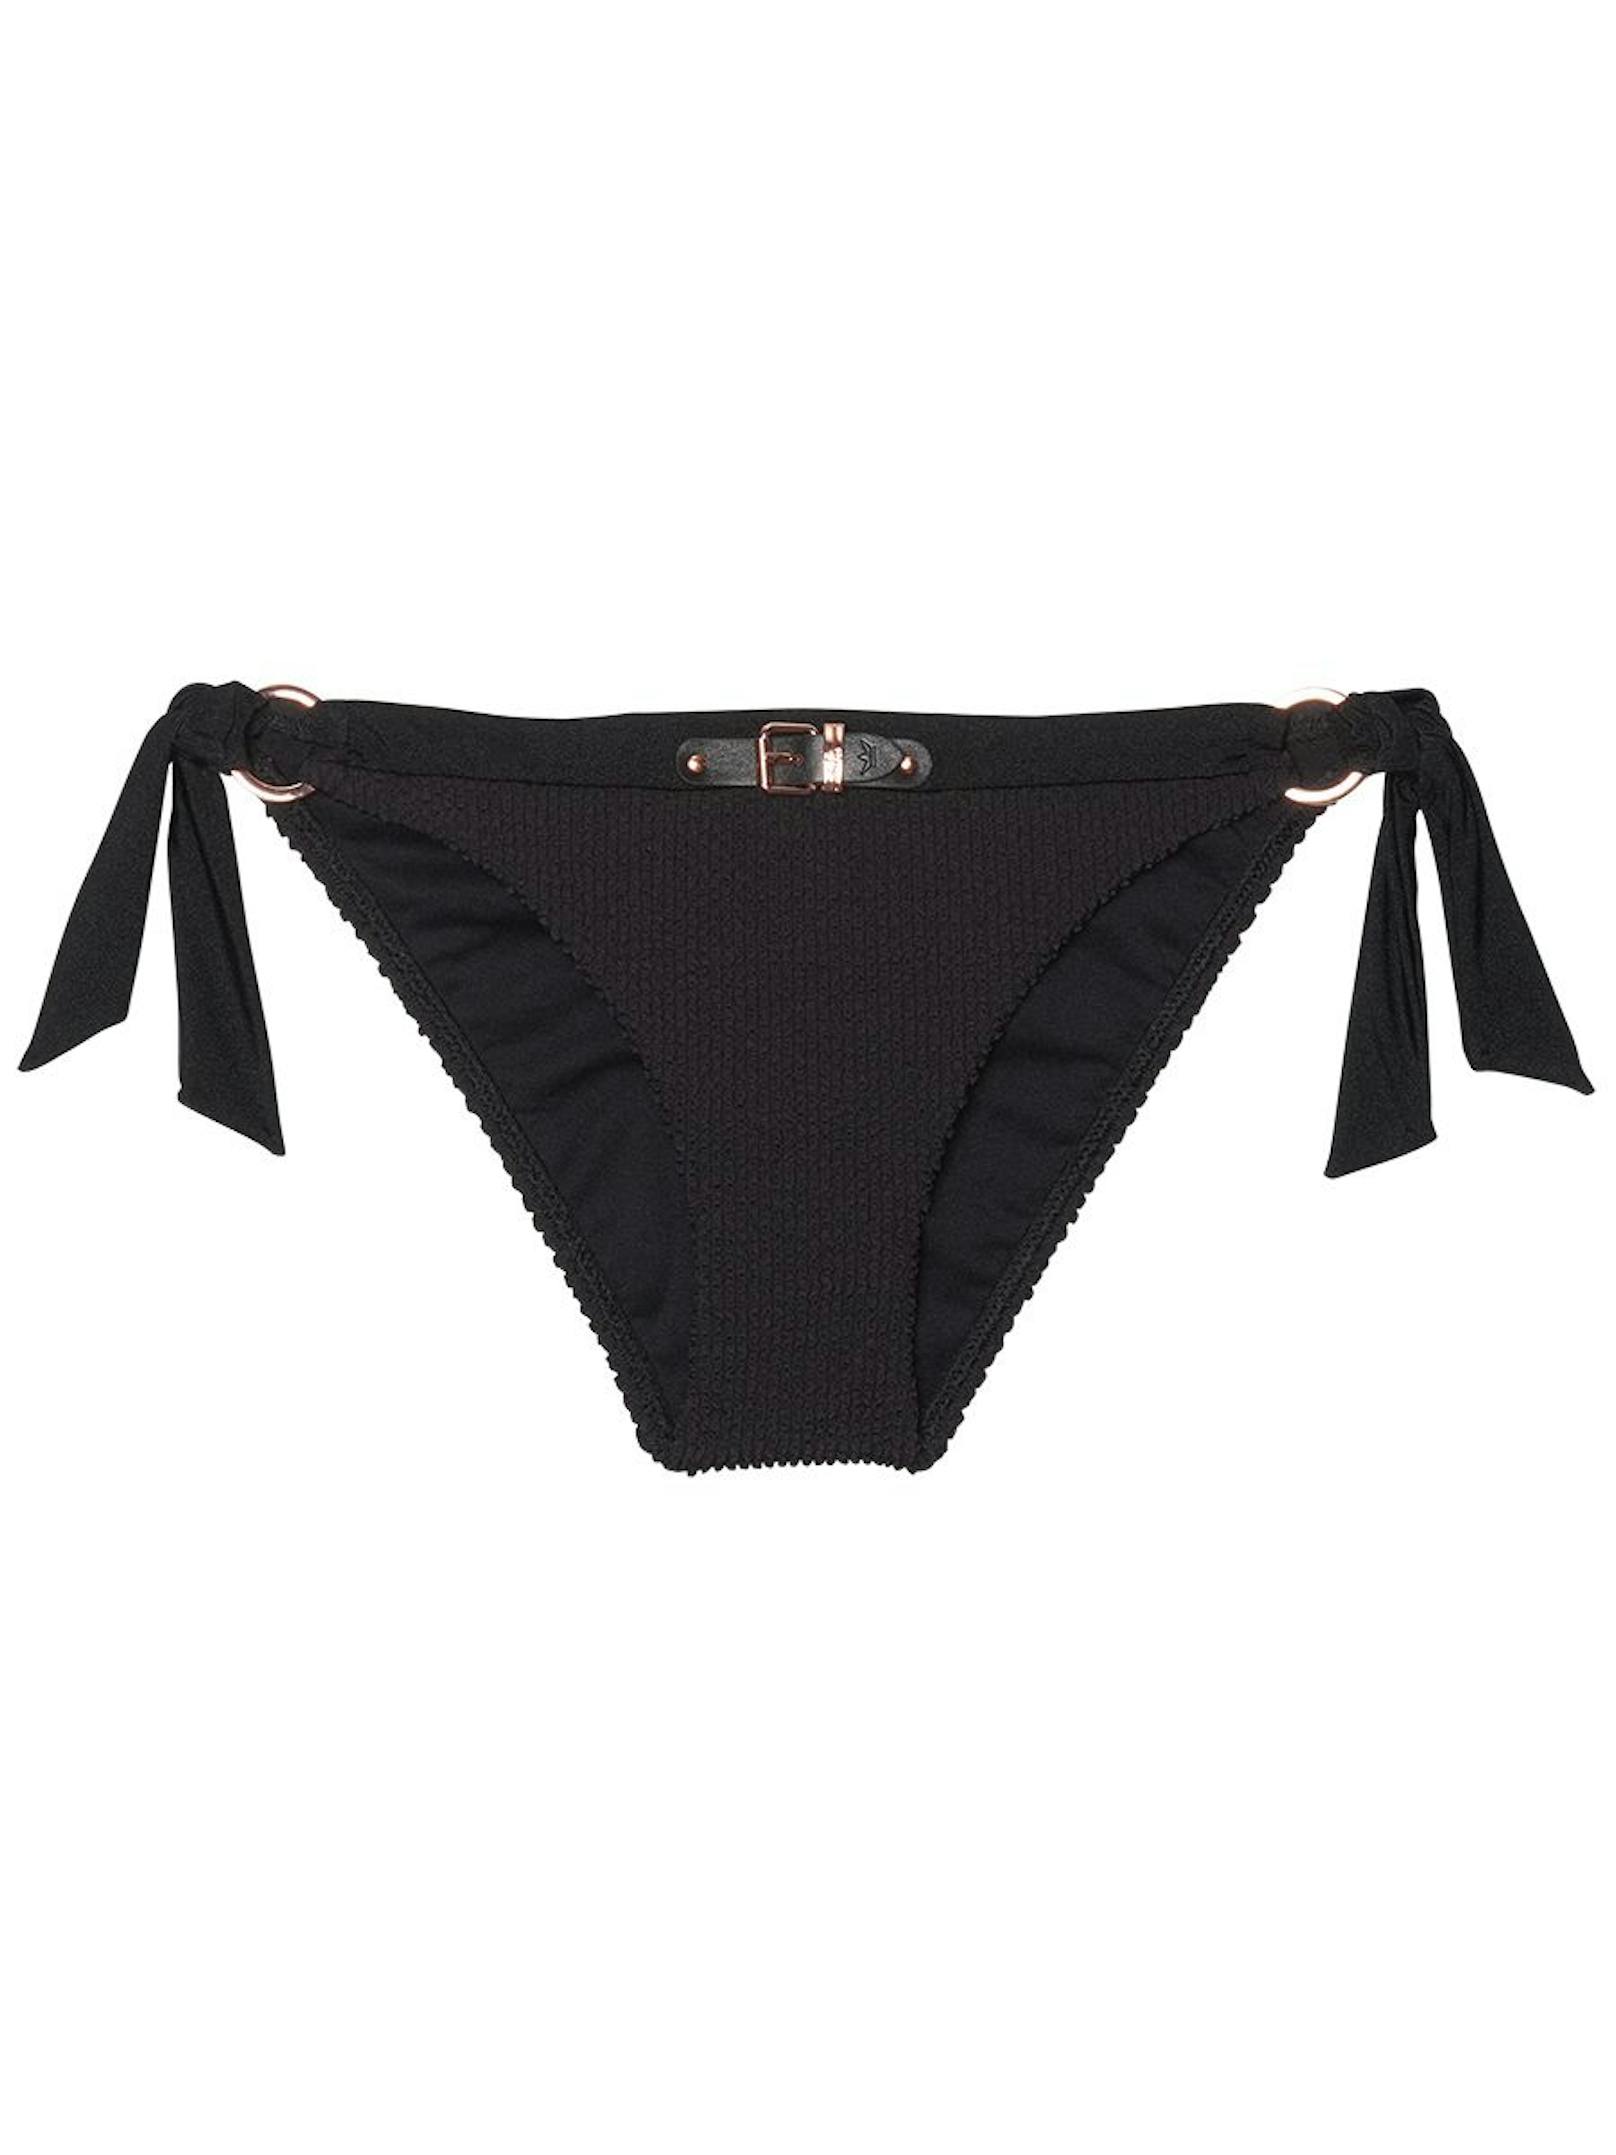 "Buckle Royale"-Bikini-Hose Minislip um 49 Euro.